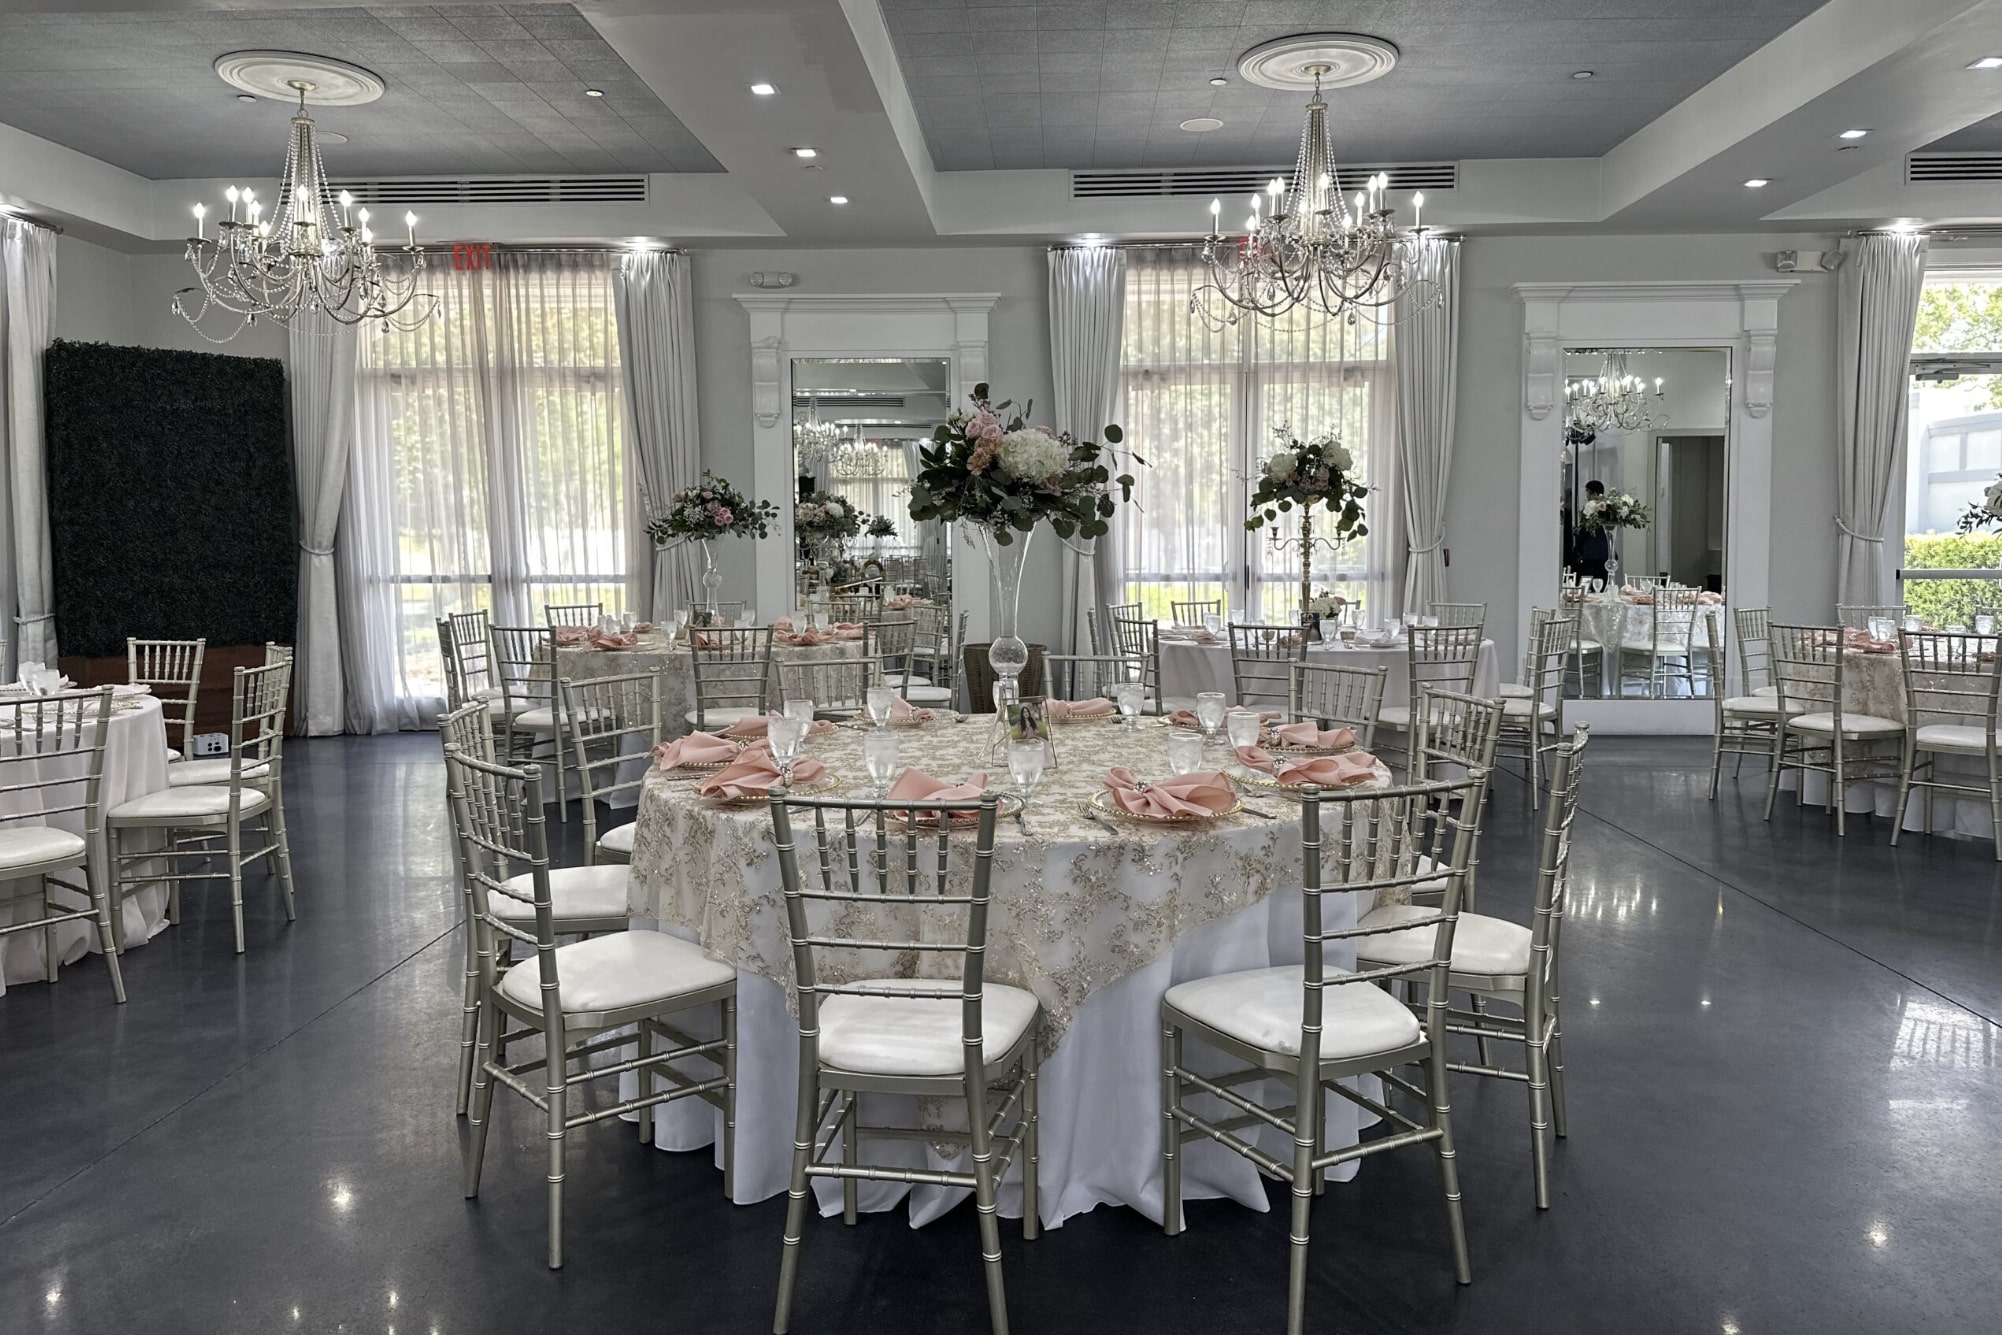 Wedding venues near Disney - LaBellaRose Ballroom